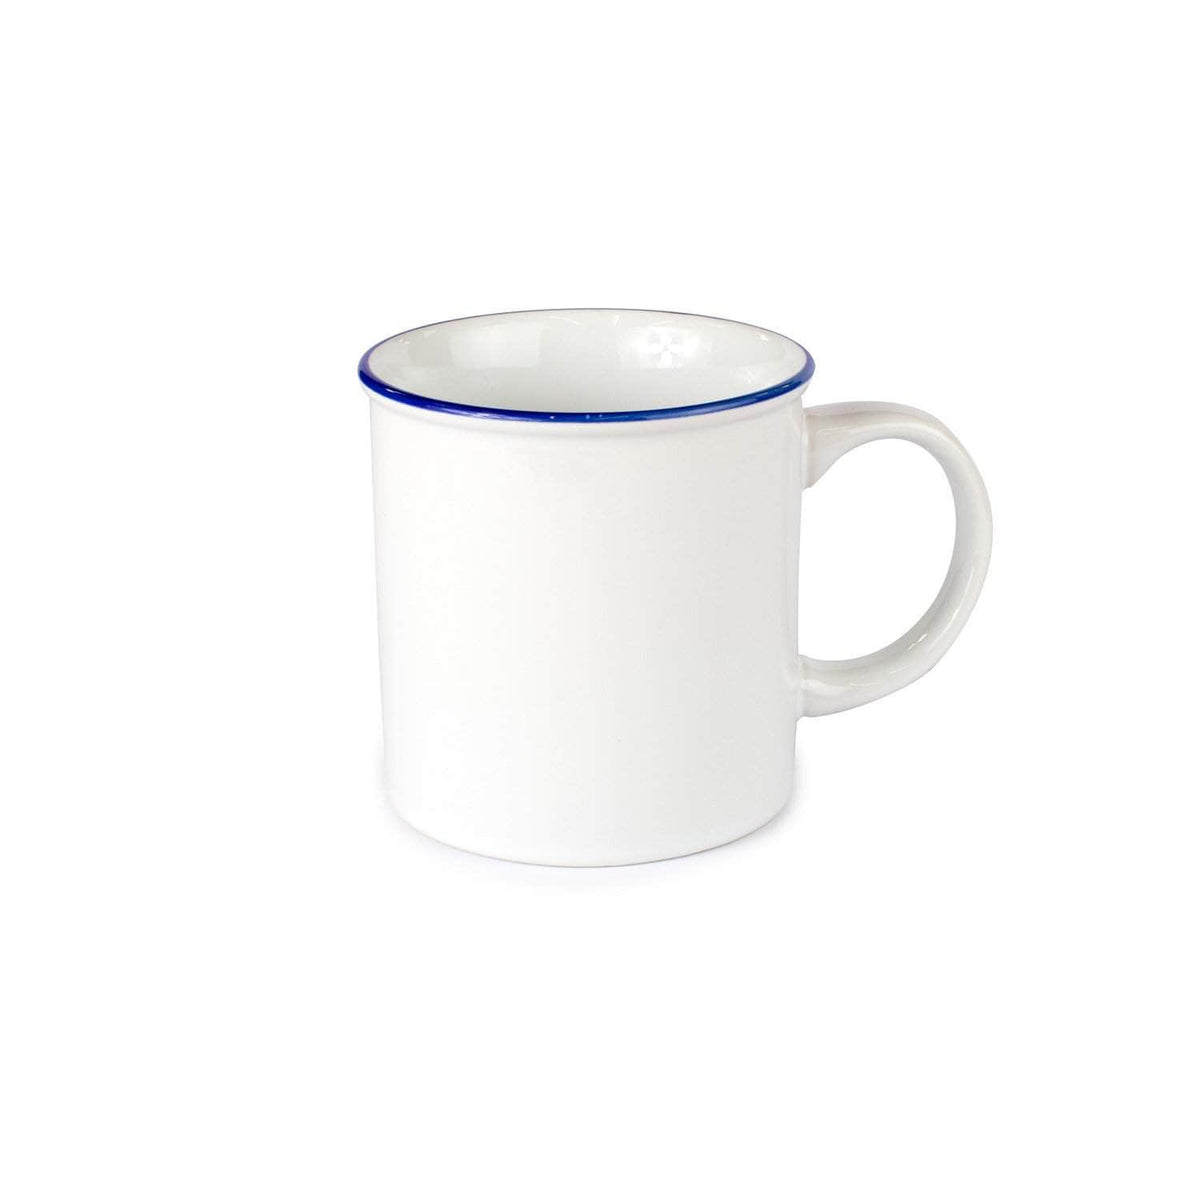 White ceramic Tea/Coffee mug